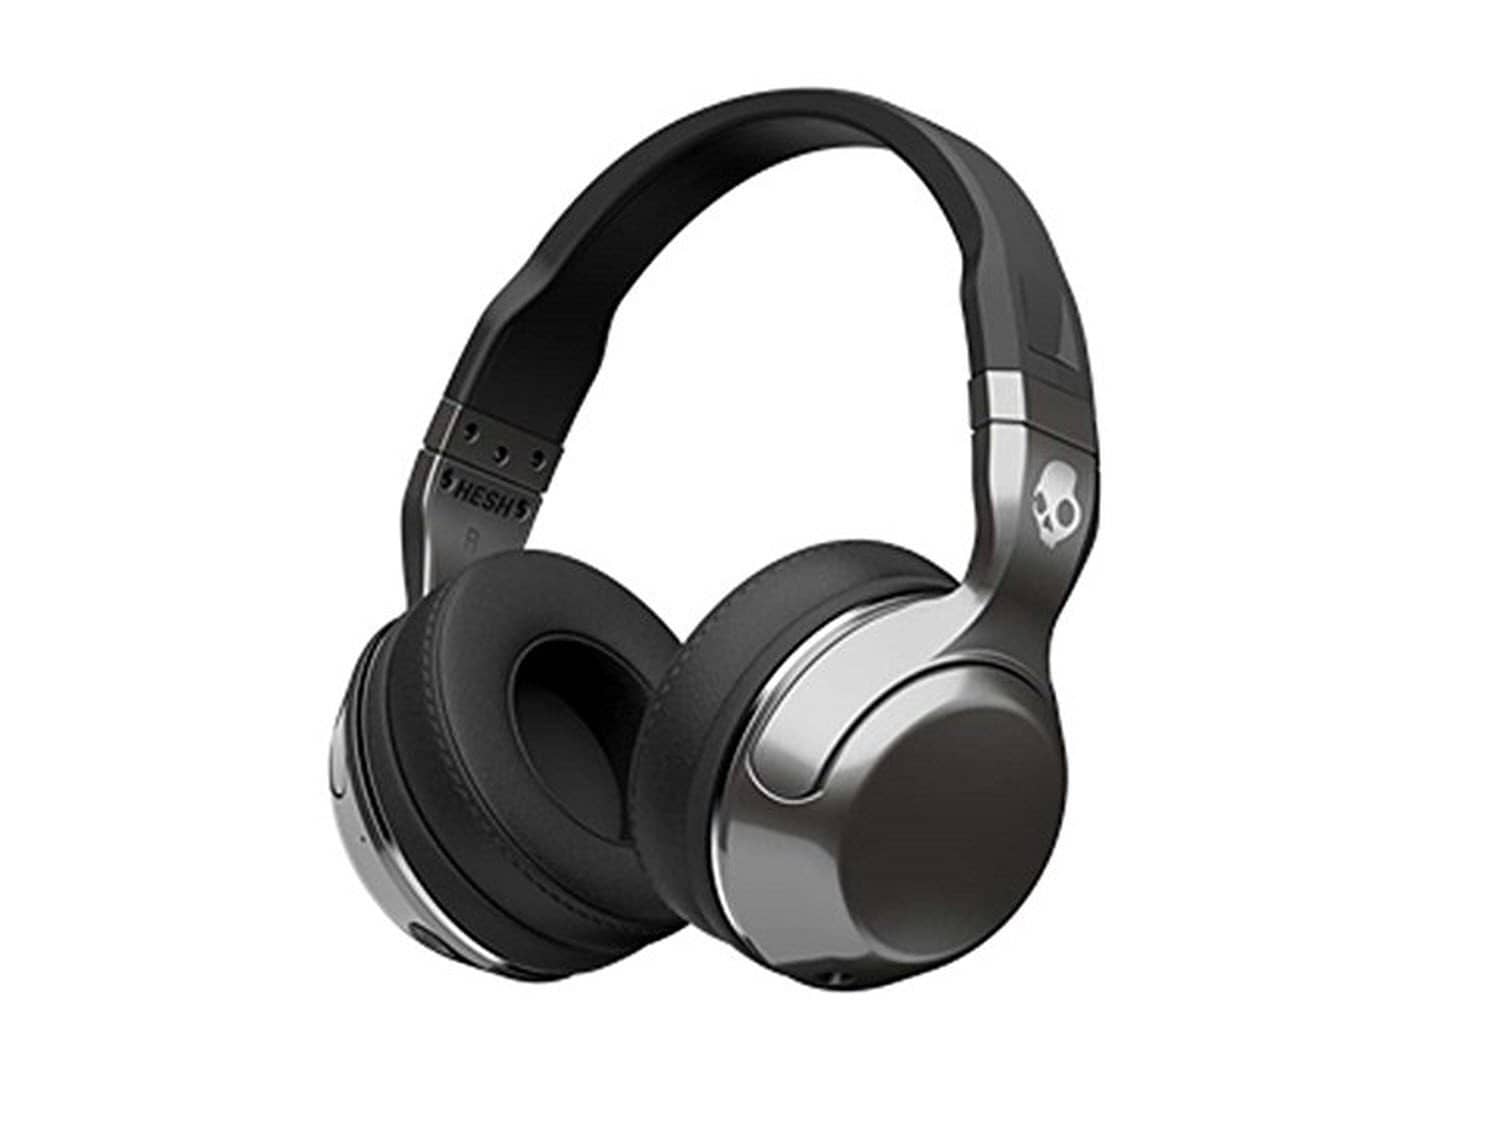 Skullcandy Hesh 2 Bluetooth Wireless Headphones with Mic - Black/Silver